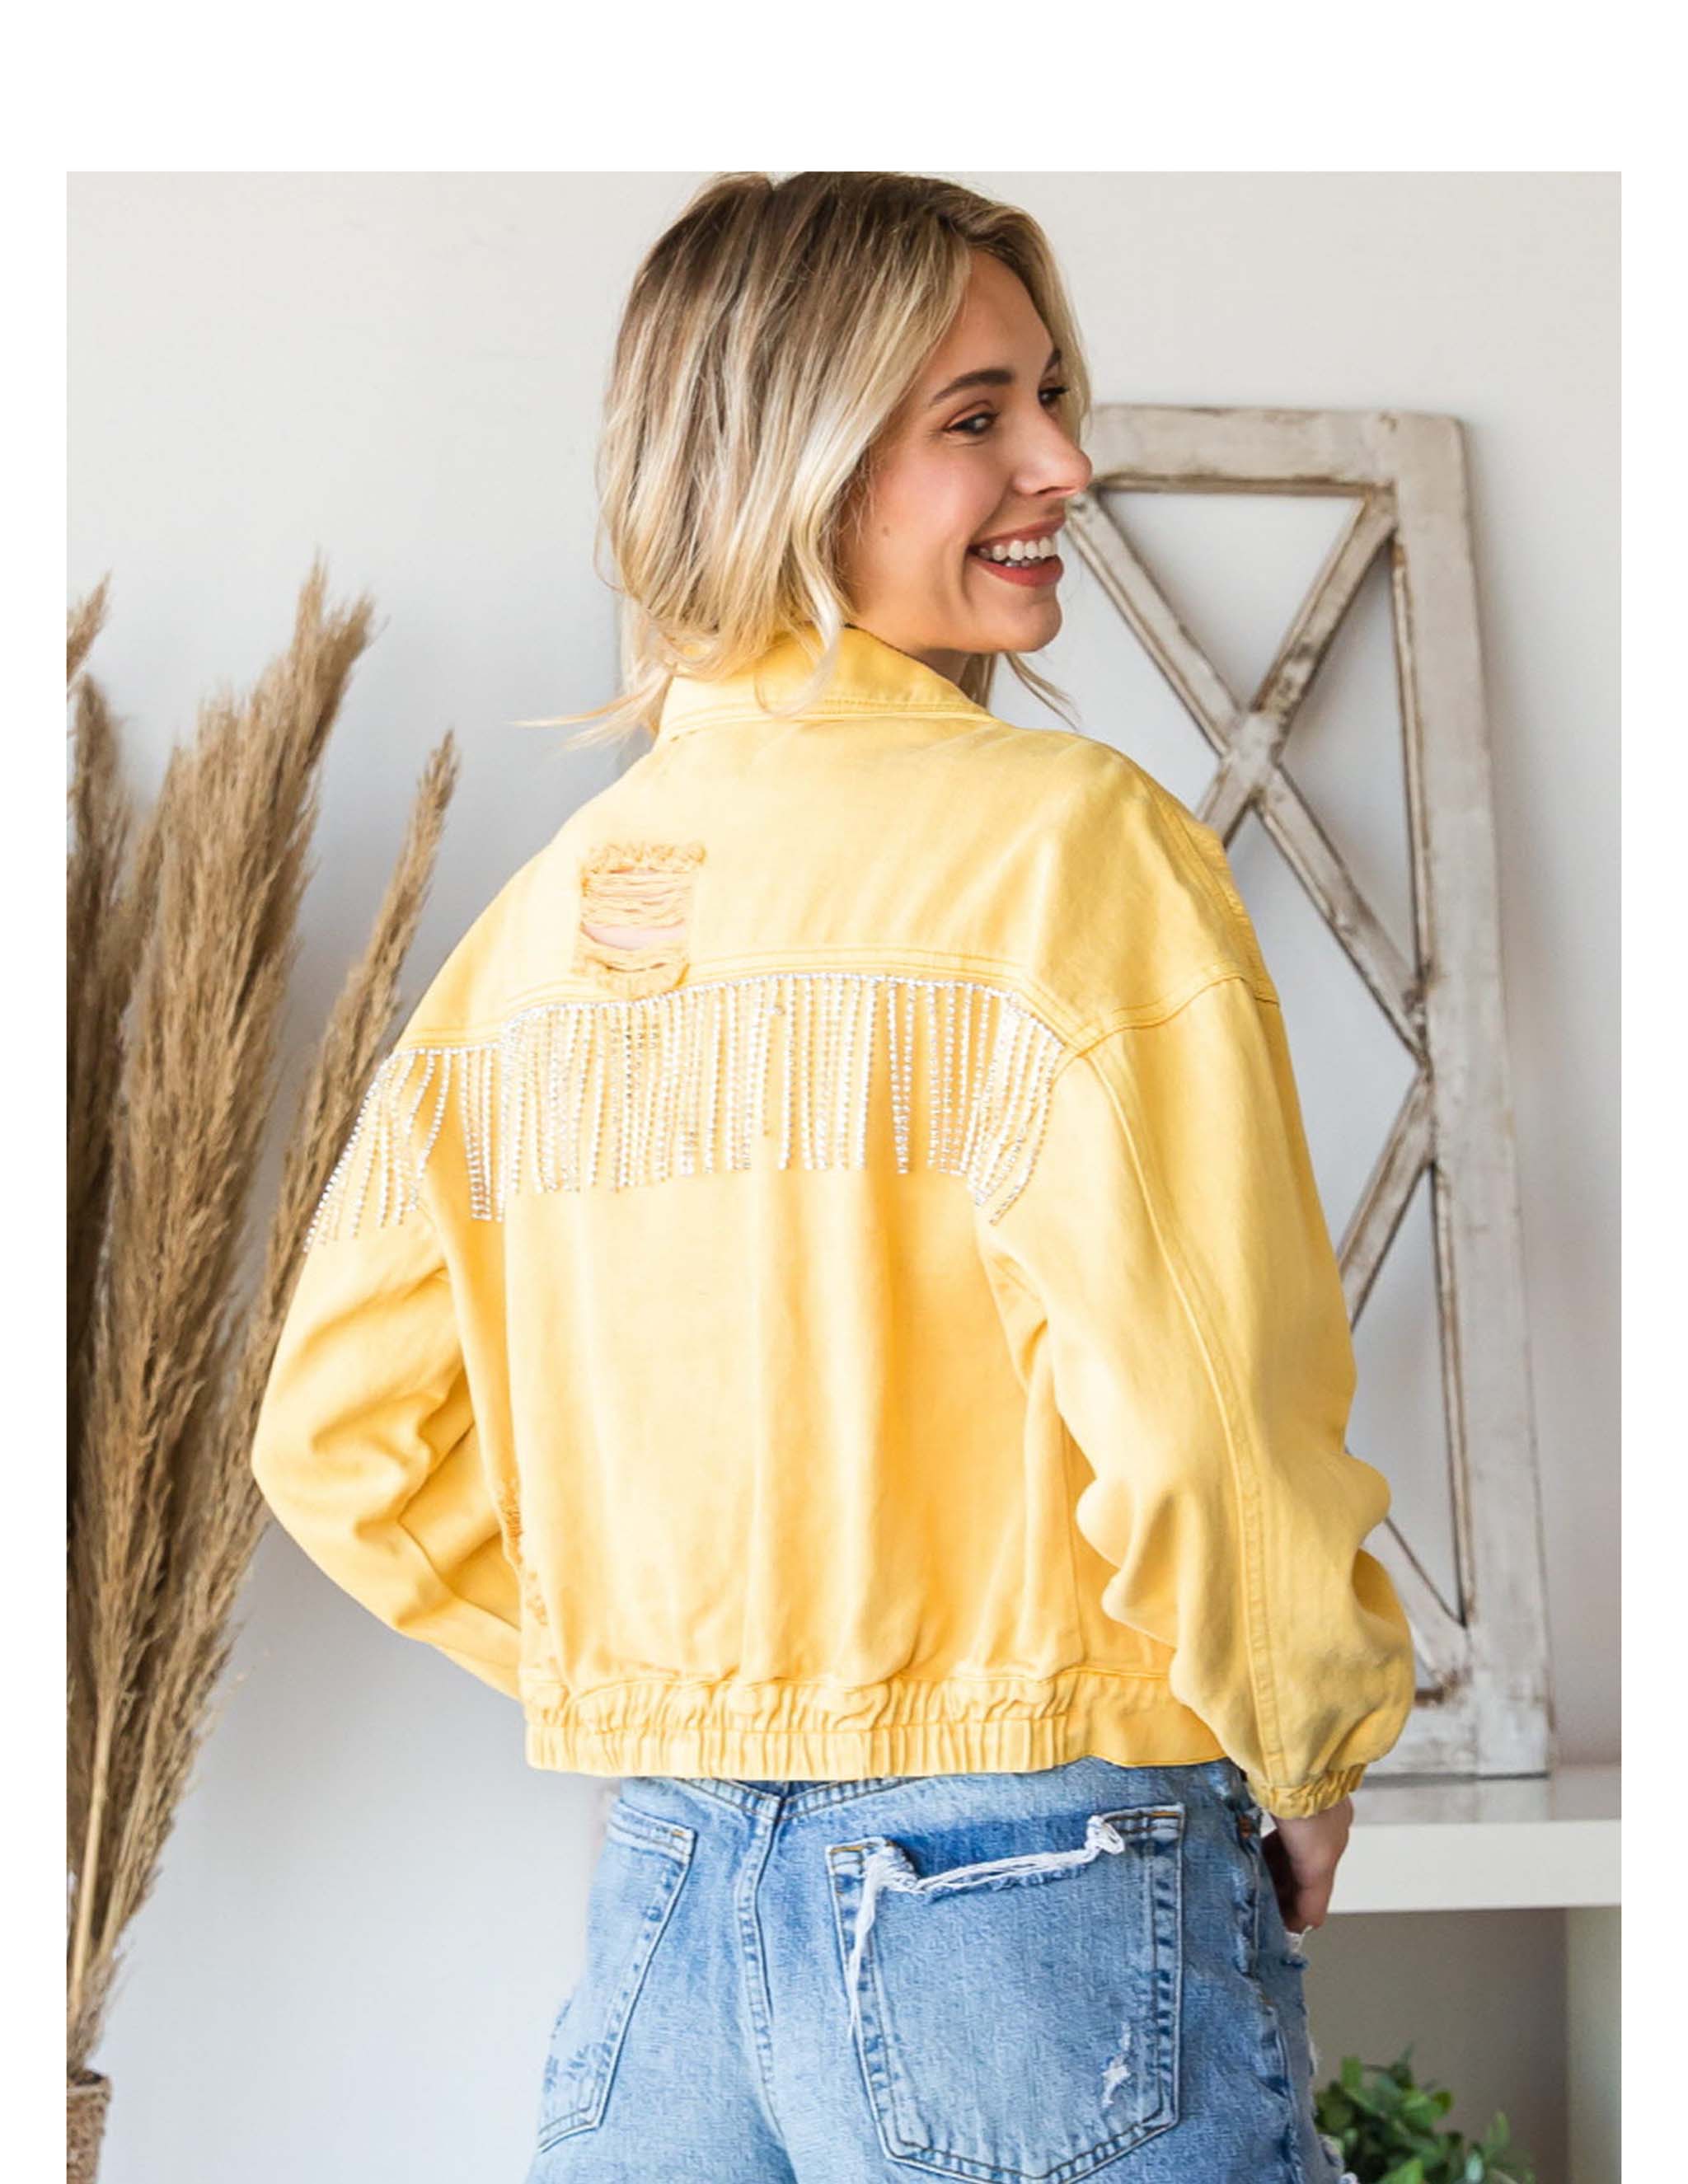 Denim jacket - Mustard yellow - Ladies | H&M IN